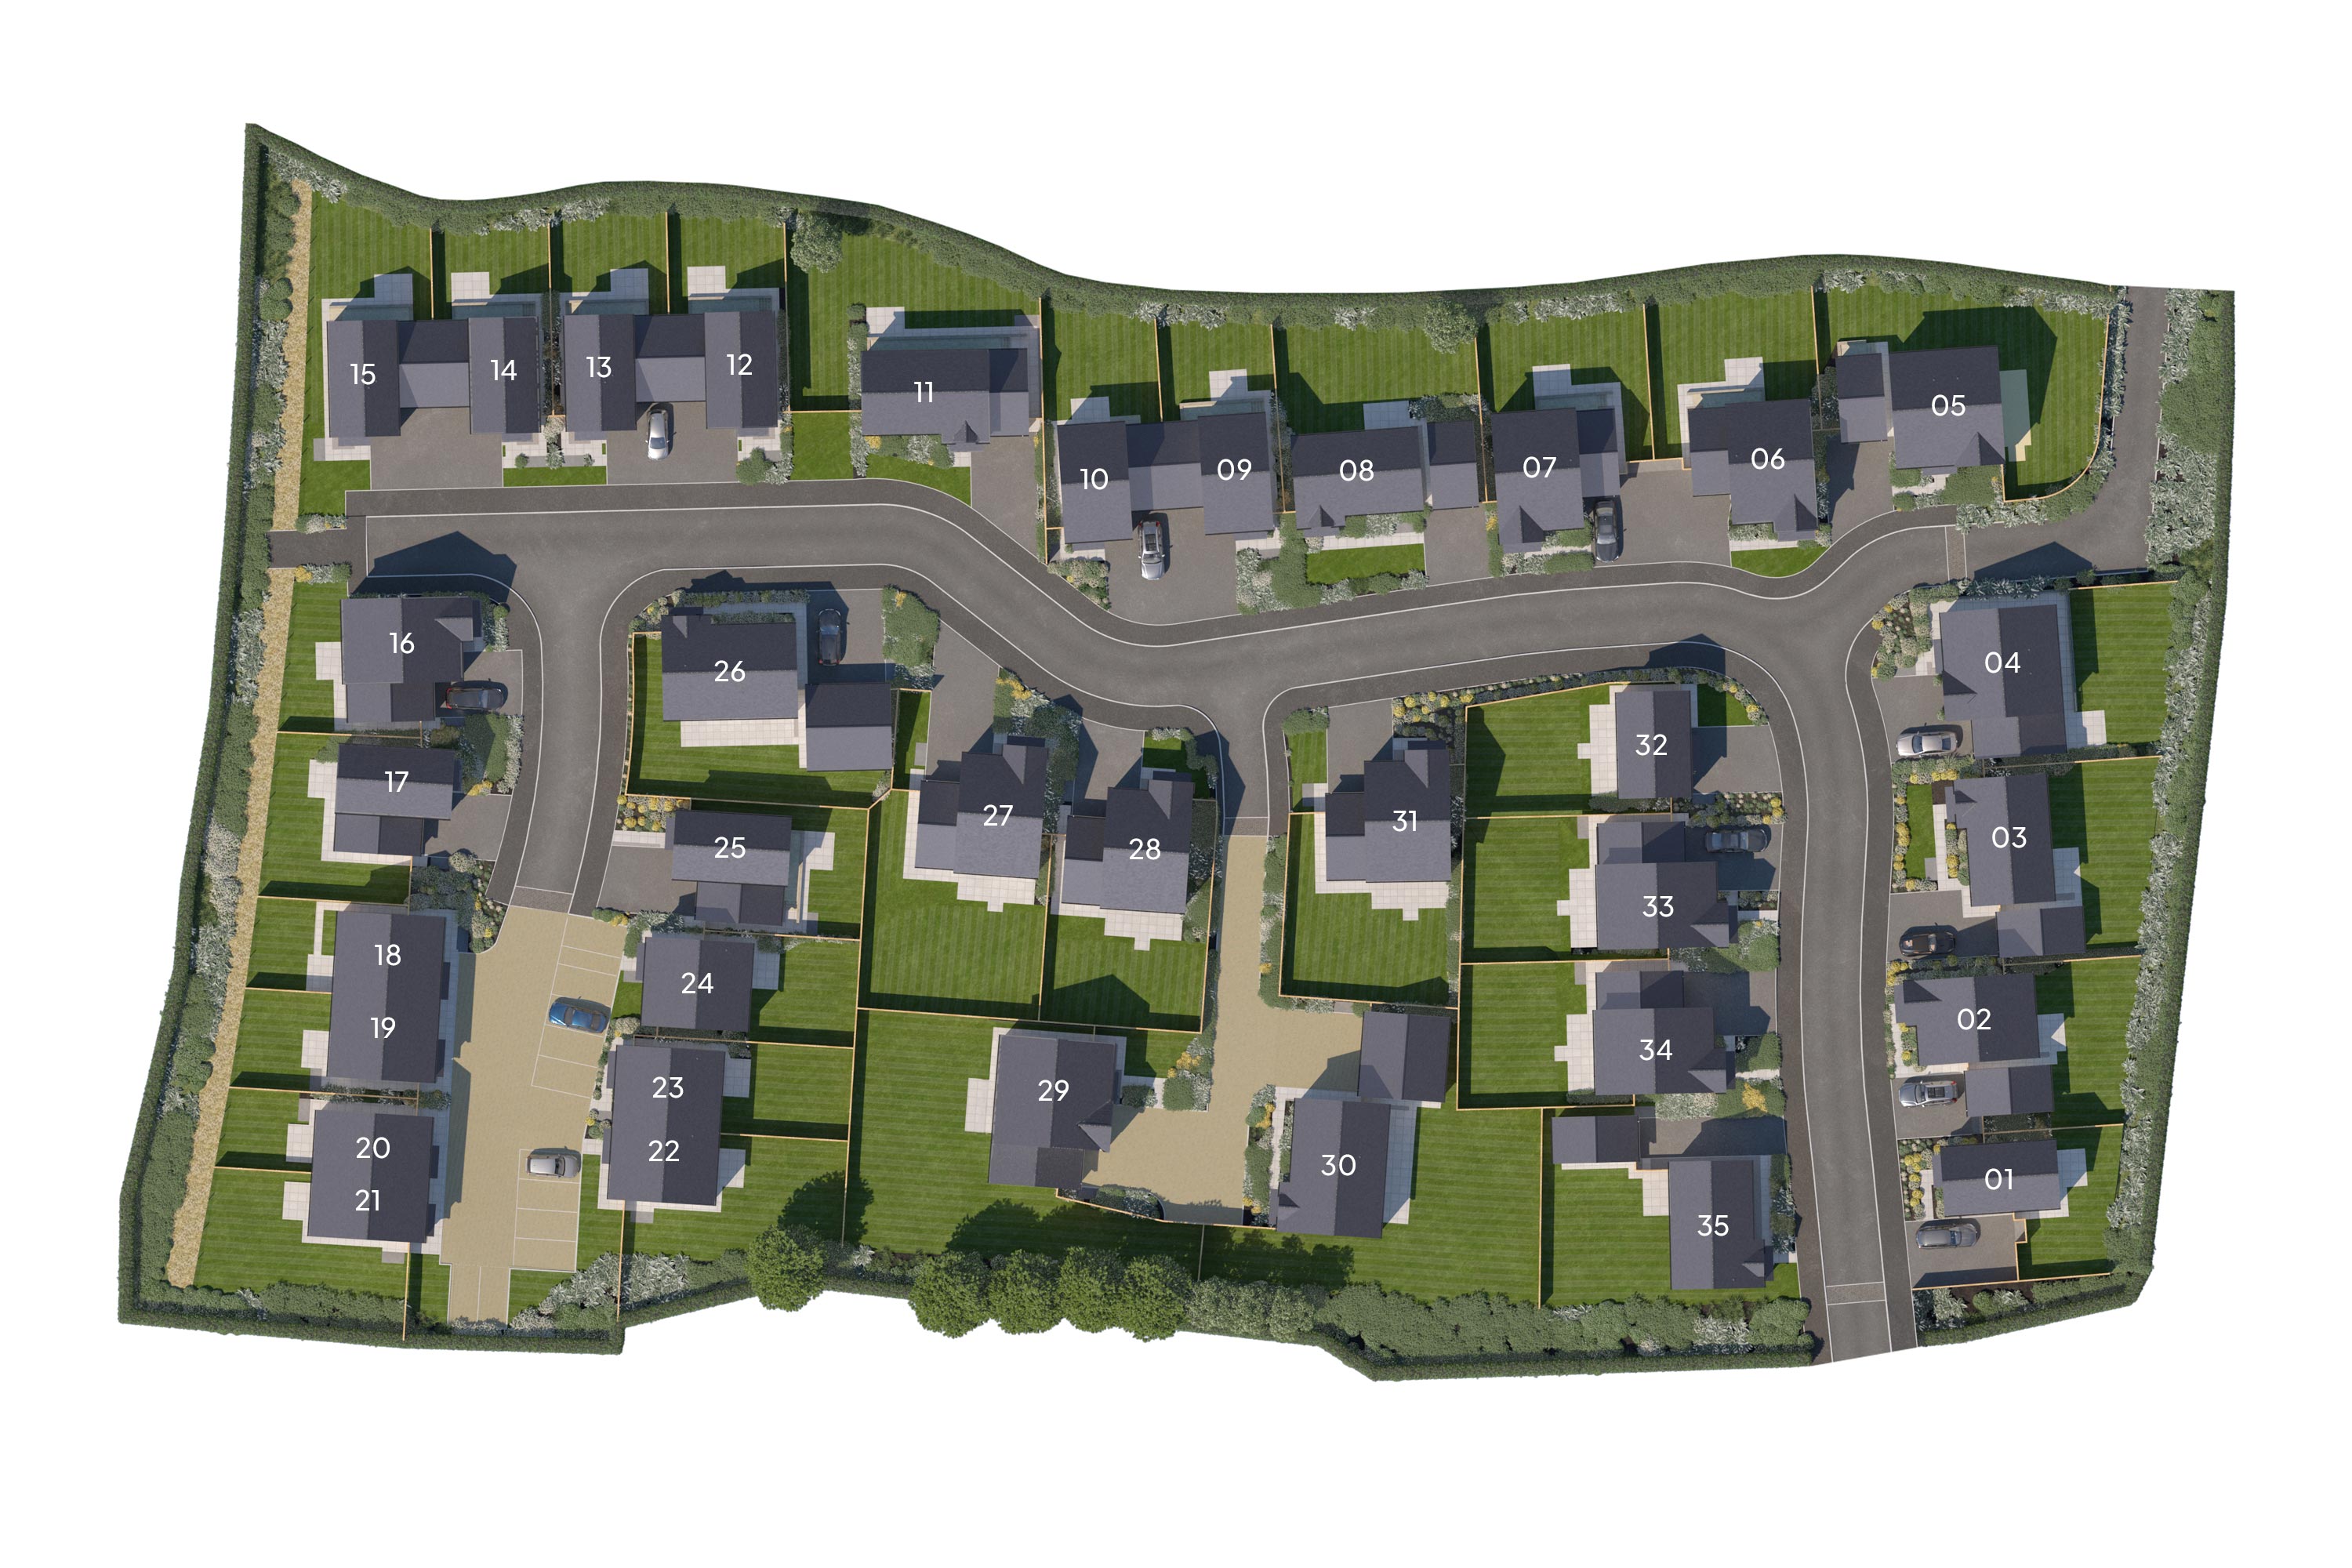 Site Map of Lower Abbots Housing Development at Buckland Brewer in North Devon